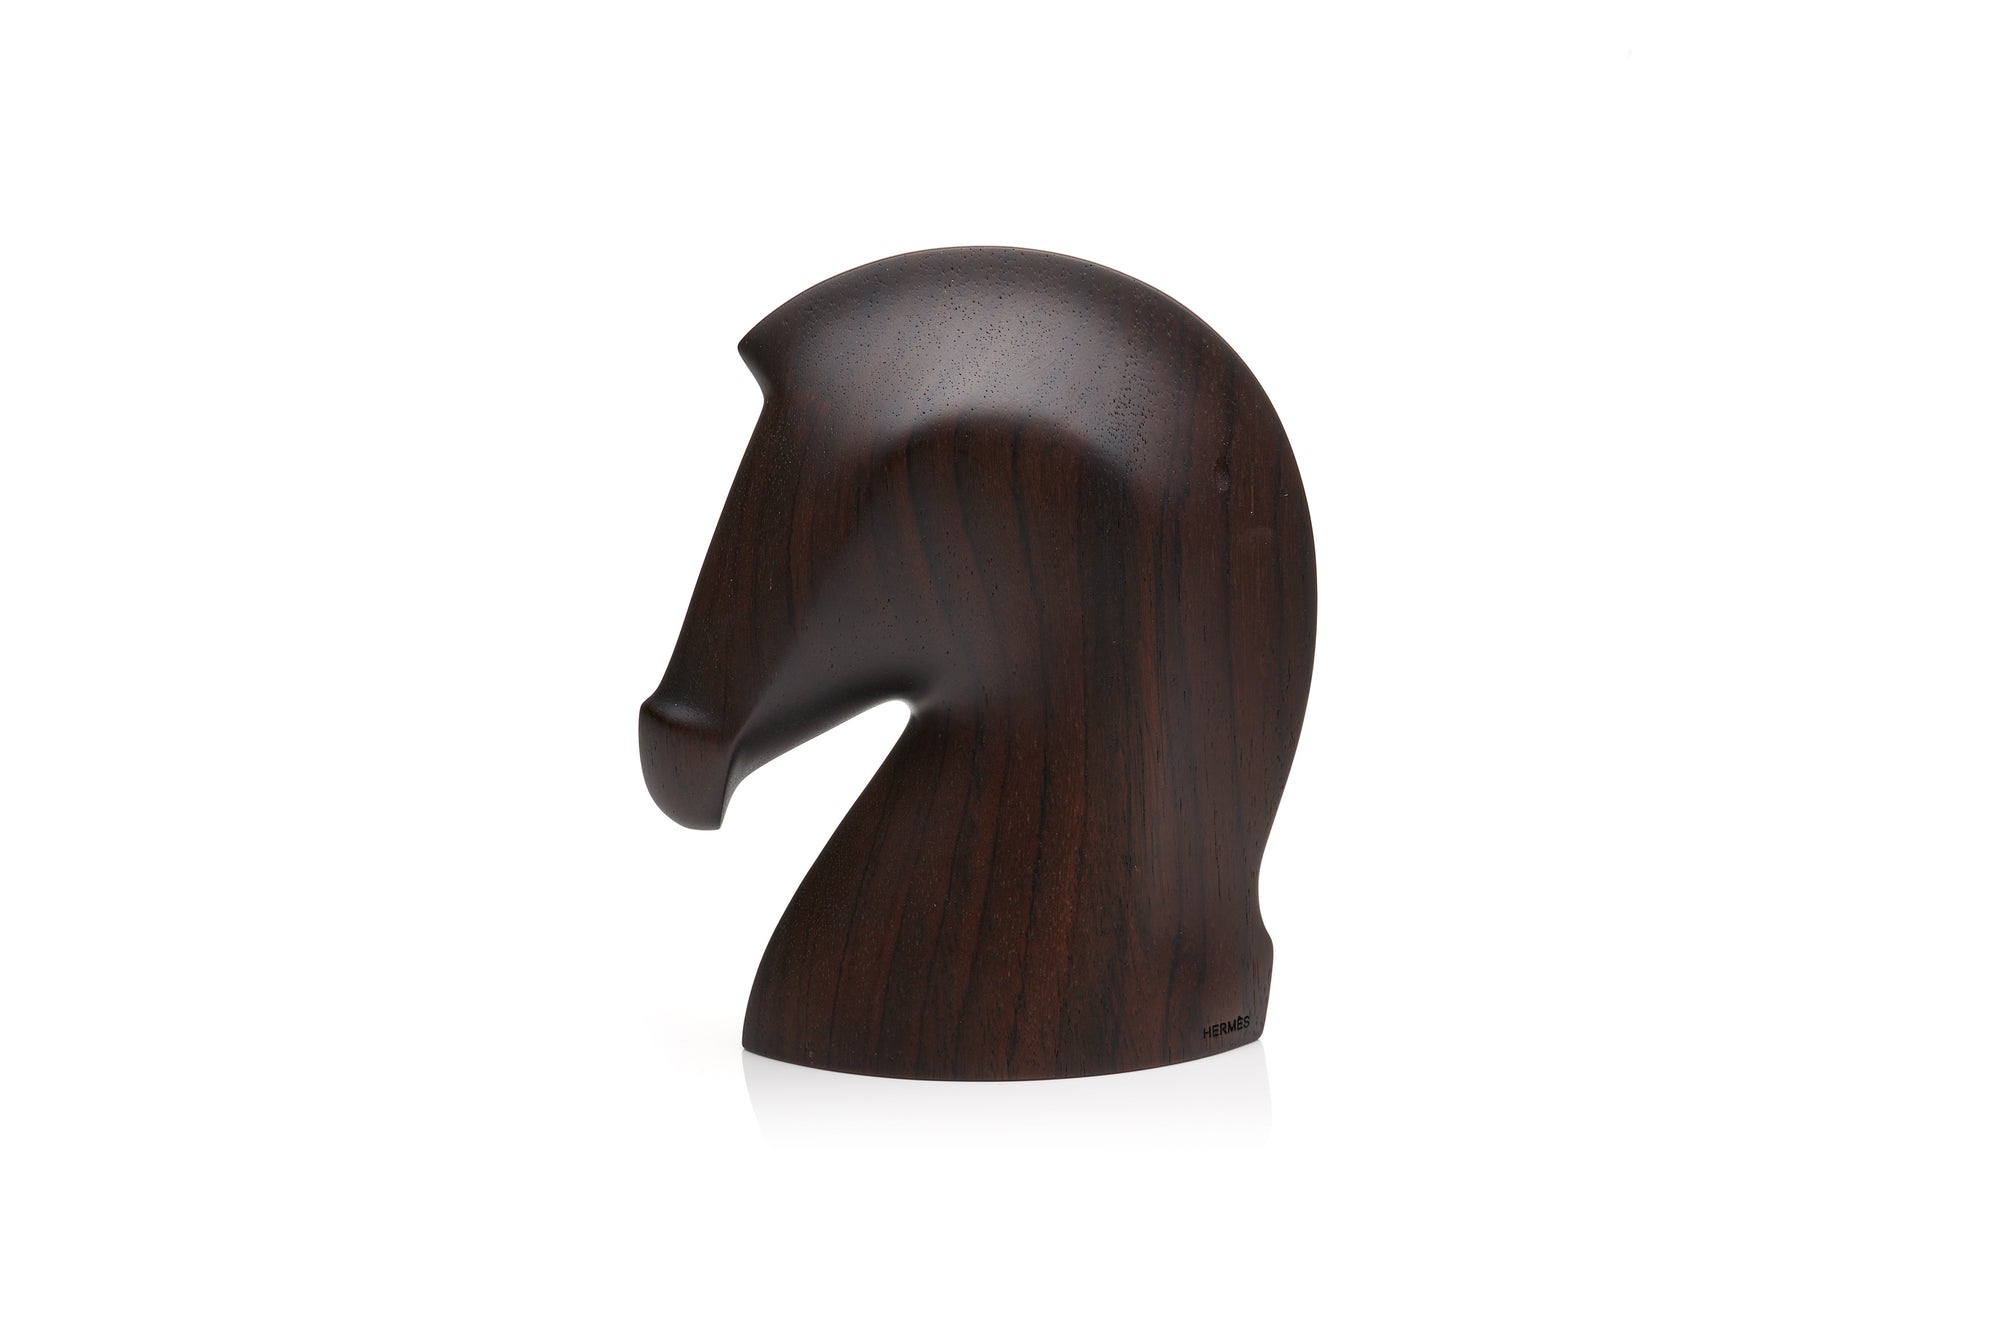 Hermes Horse Head Paperweight, Macassar Ebony